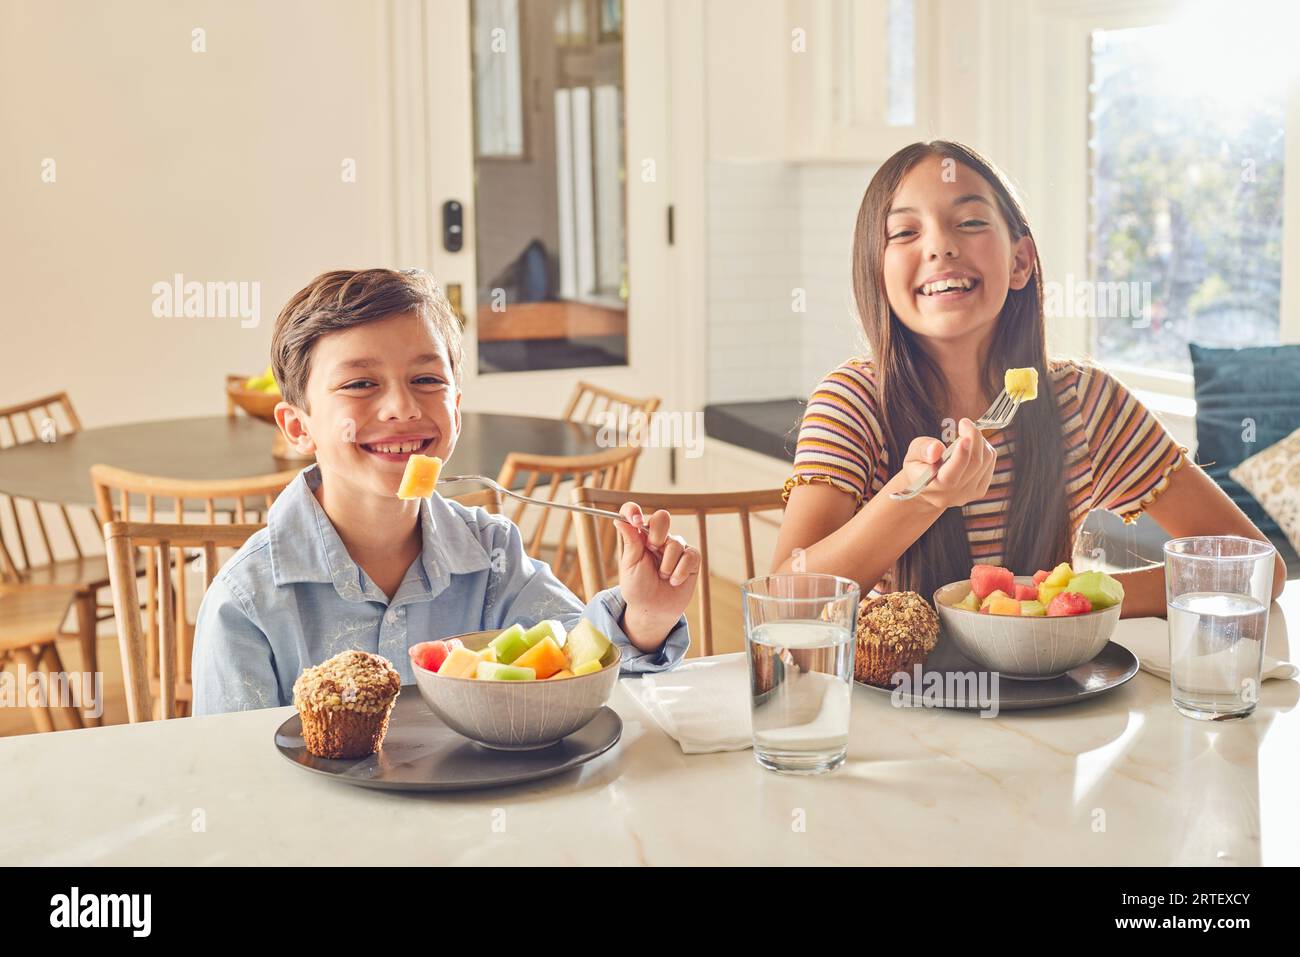 Smiling boy (8-9) and girl (12-13) enjoying breakfast in kitchen Stock Photo